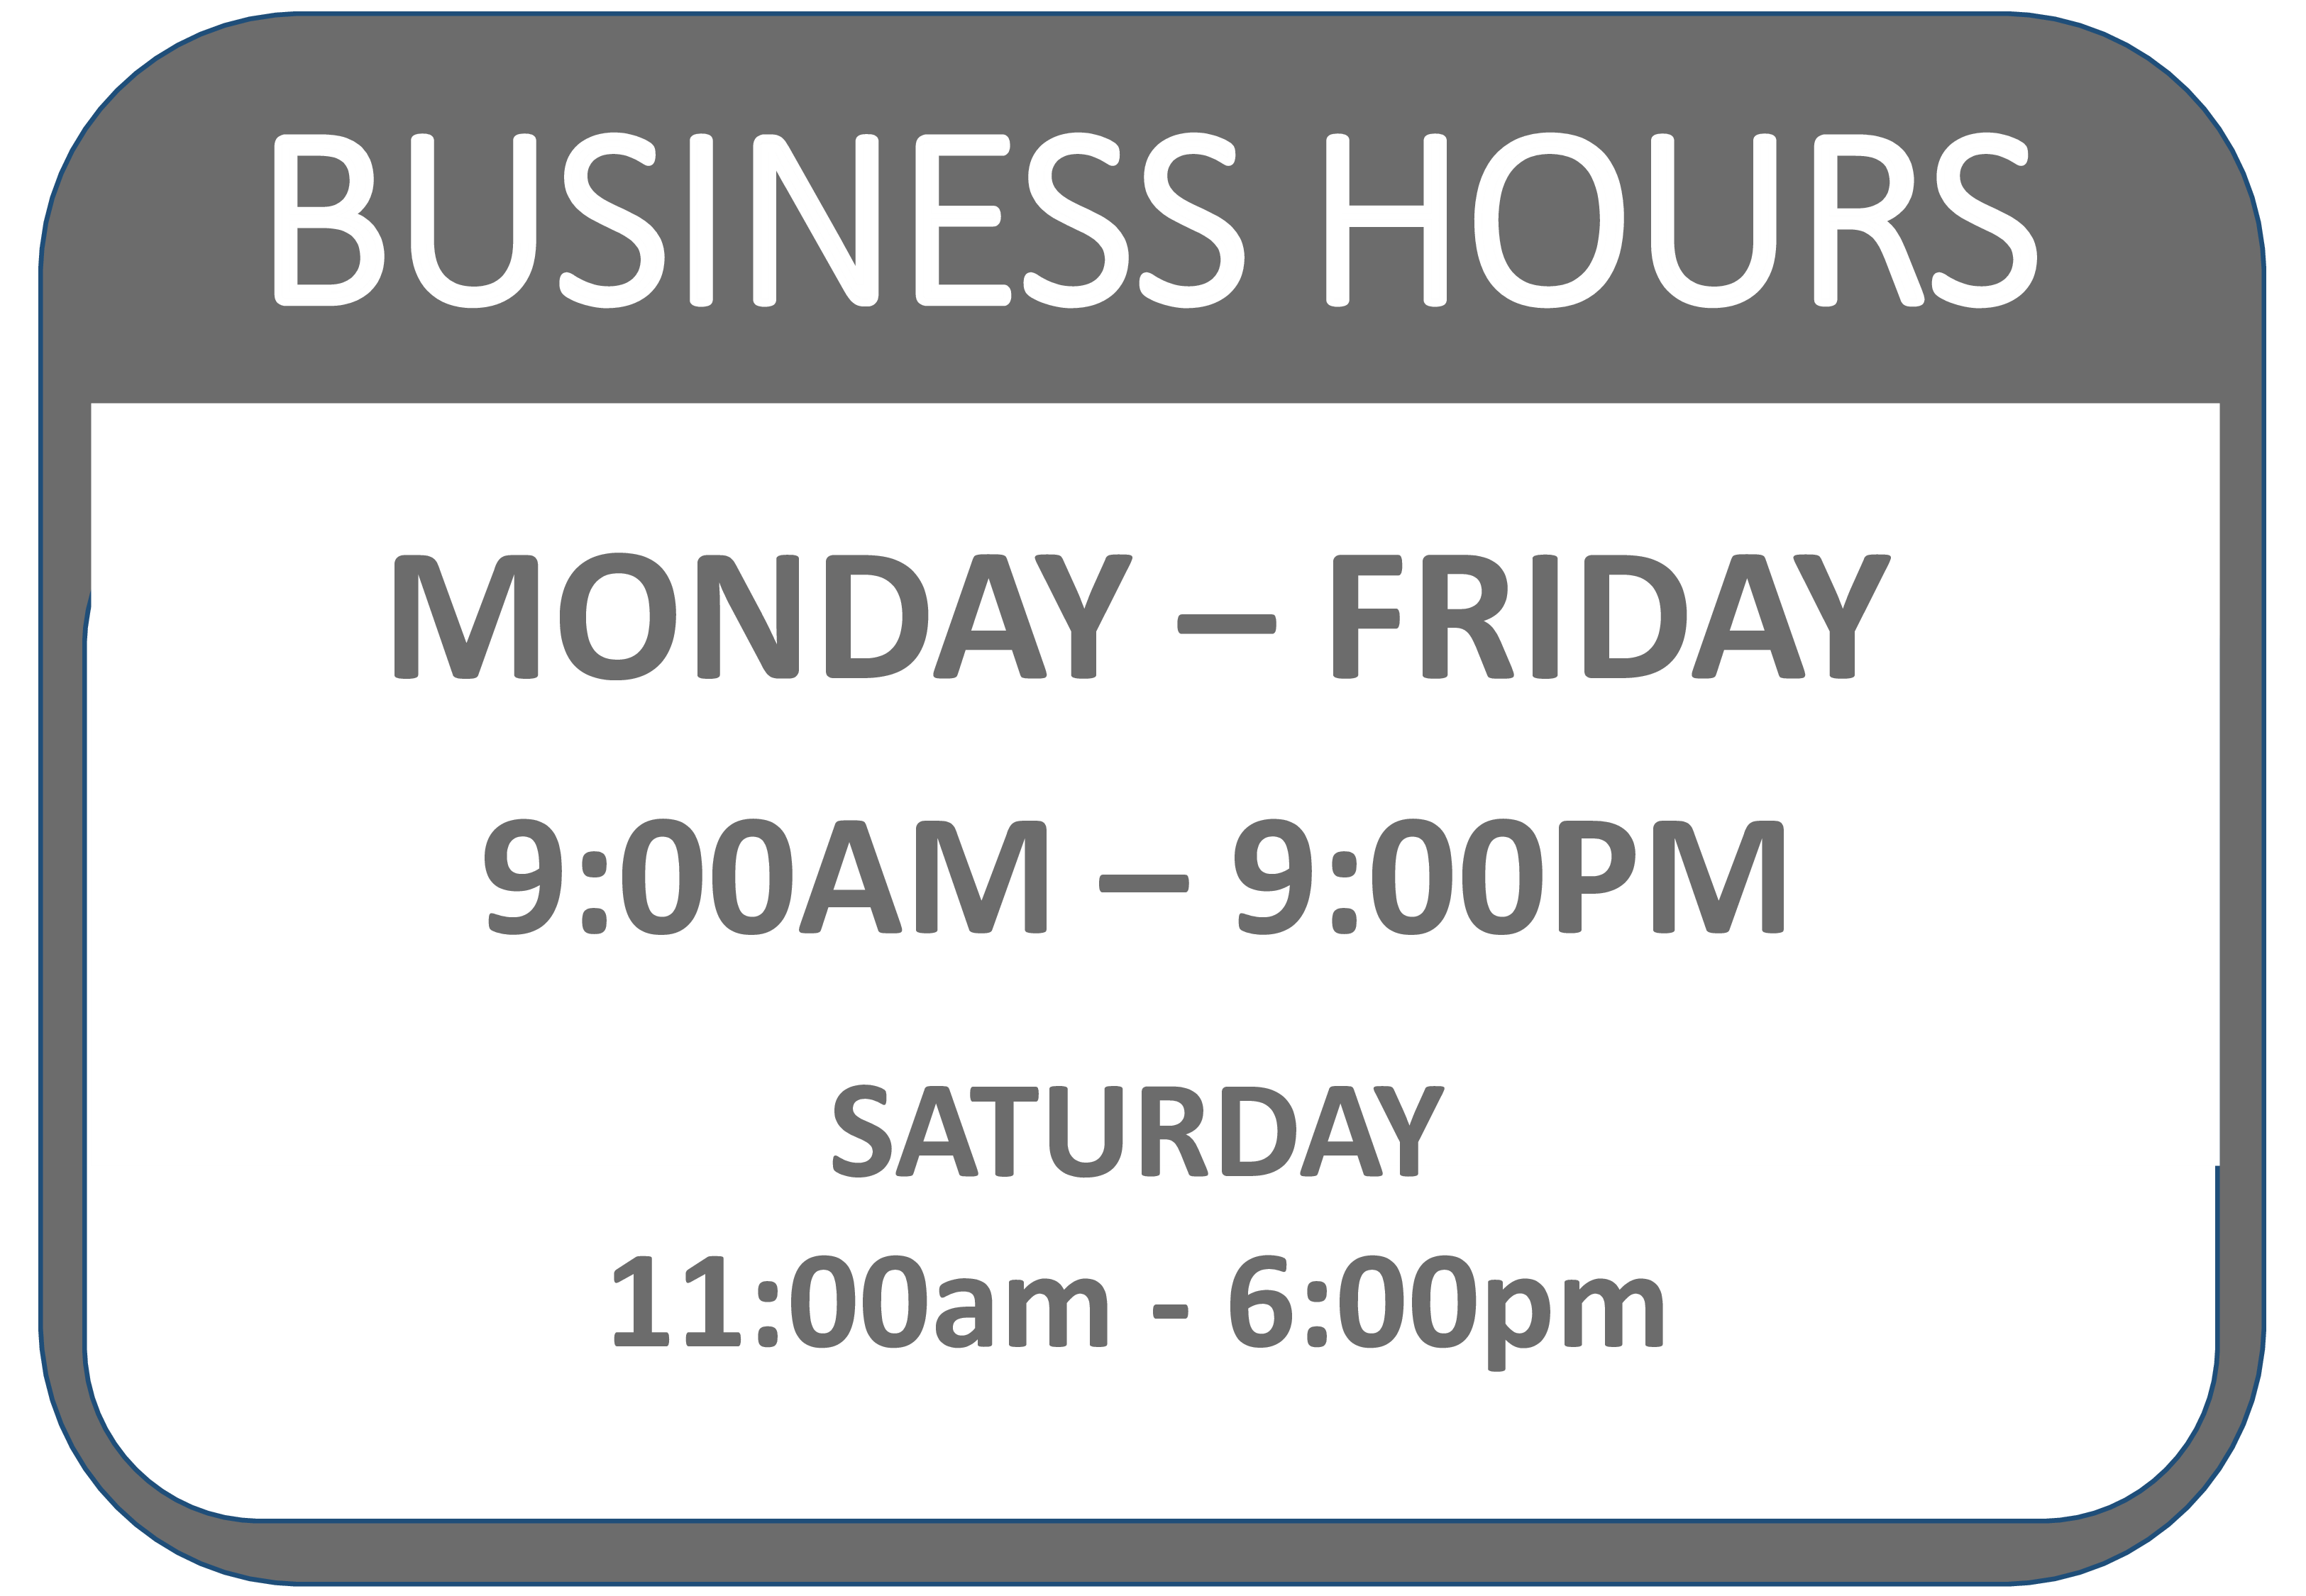 Business Hours Signage | Templates at allbusinesstemplates.com